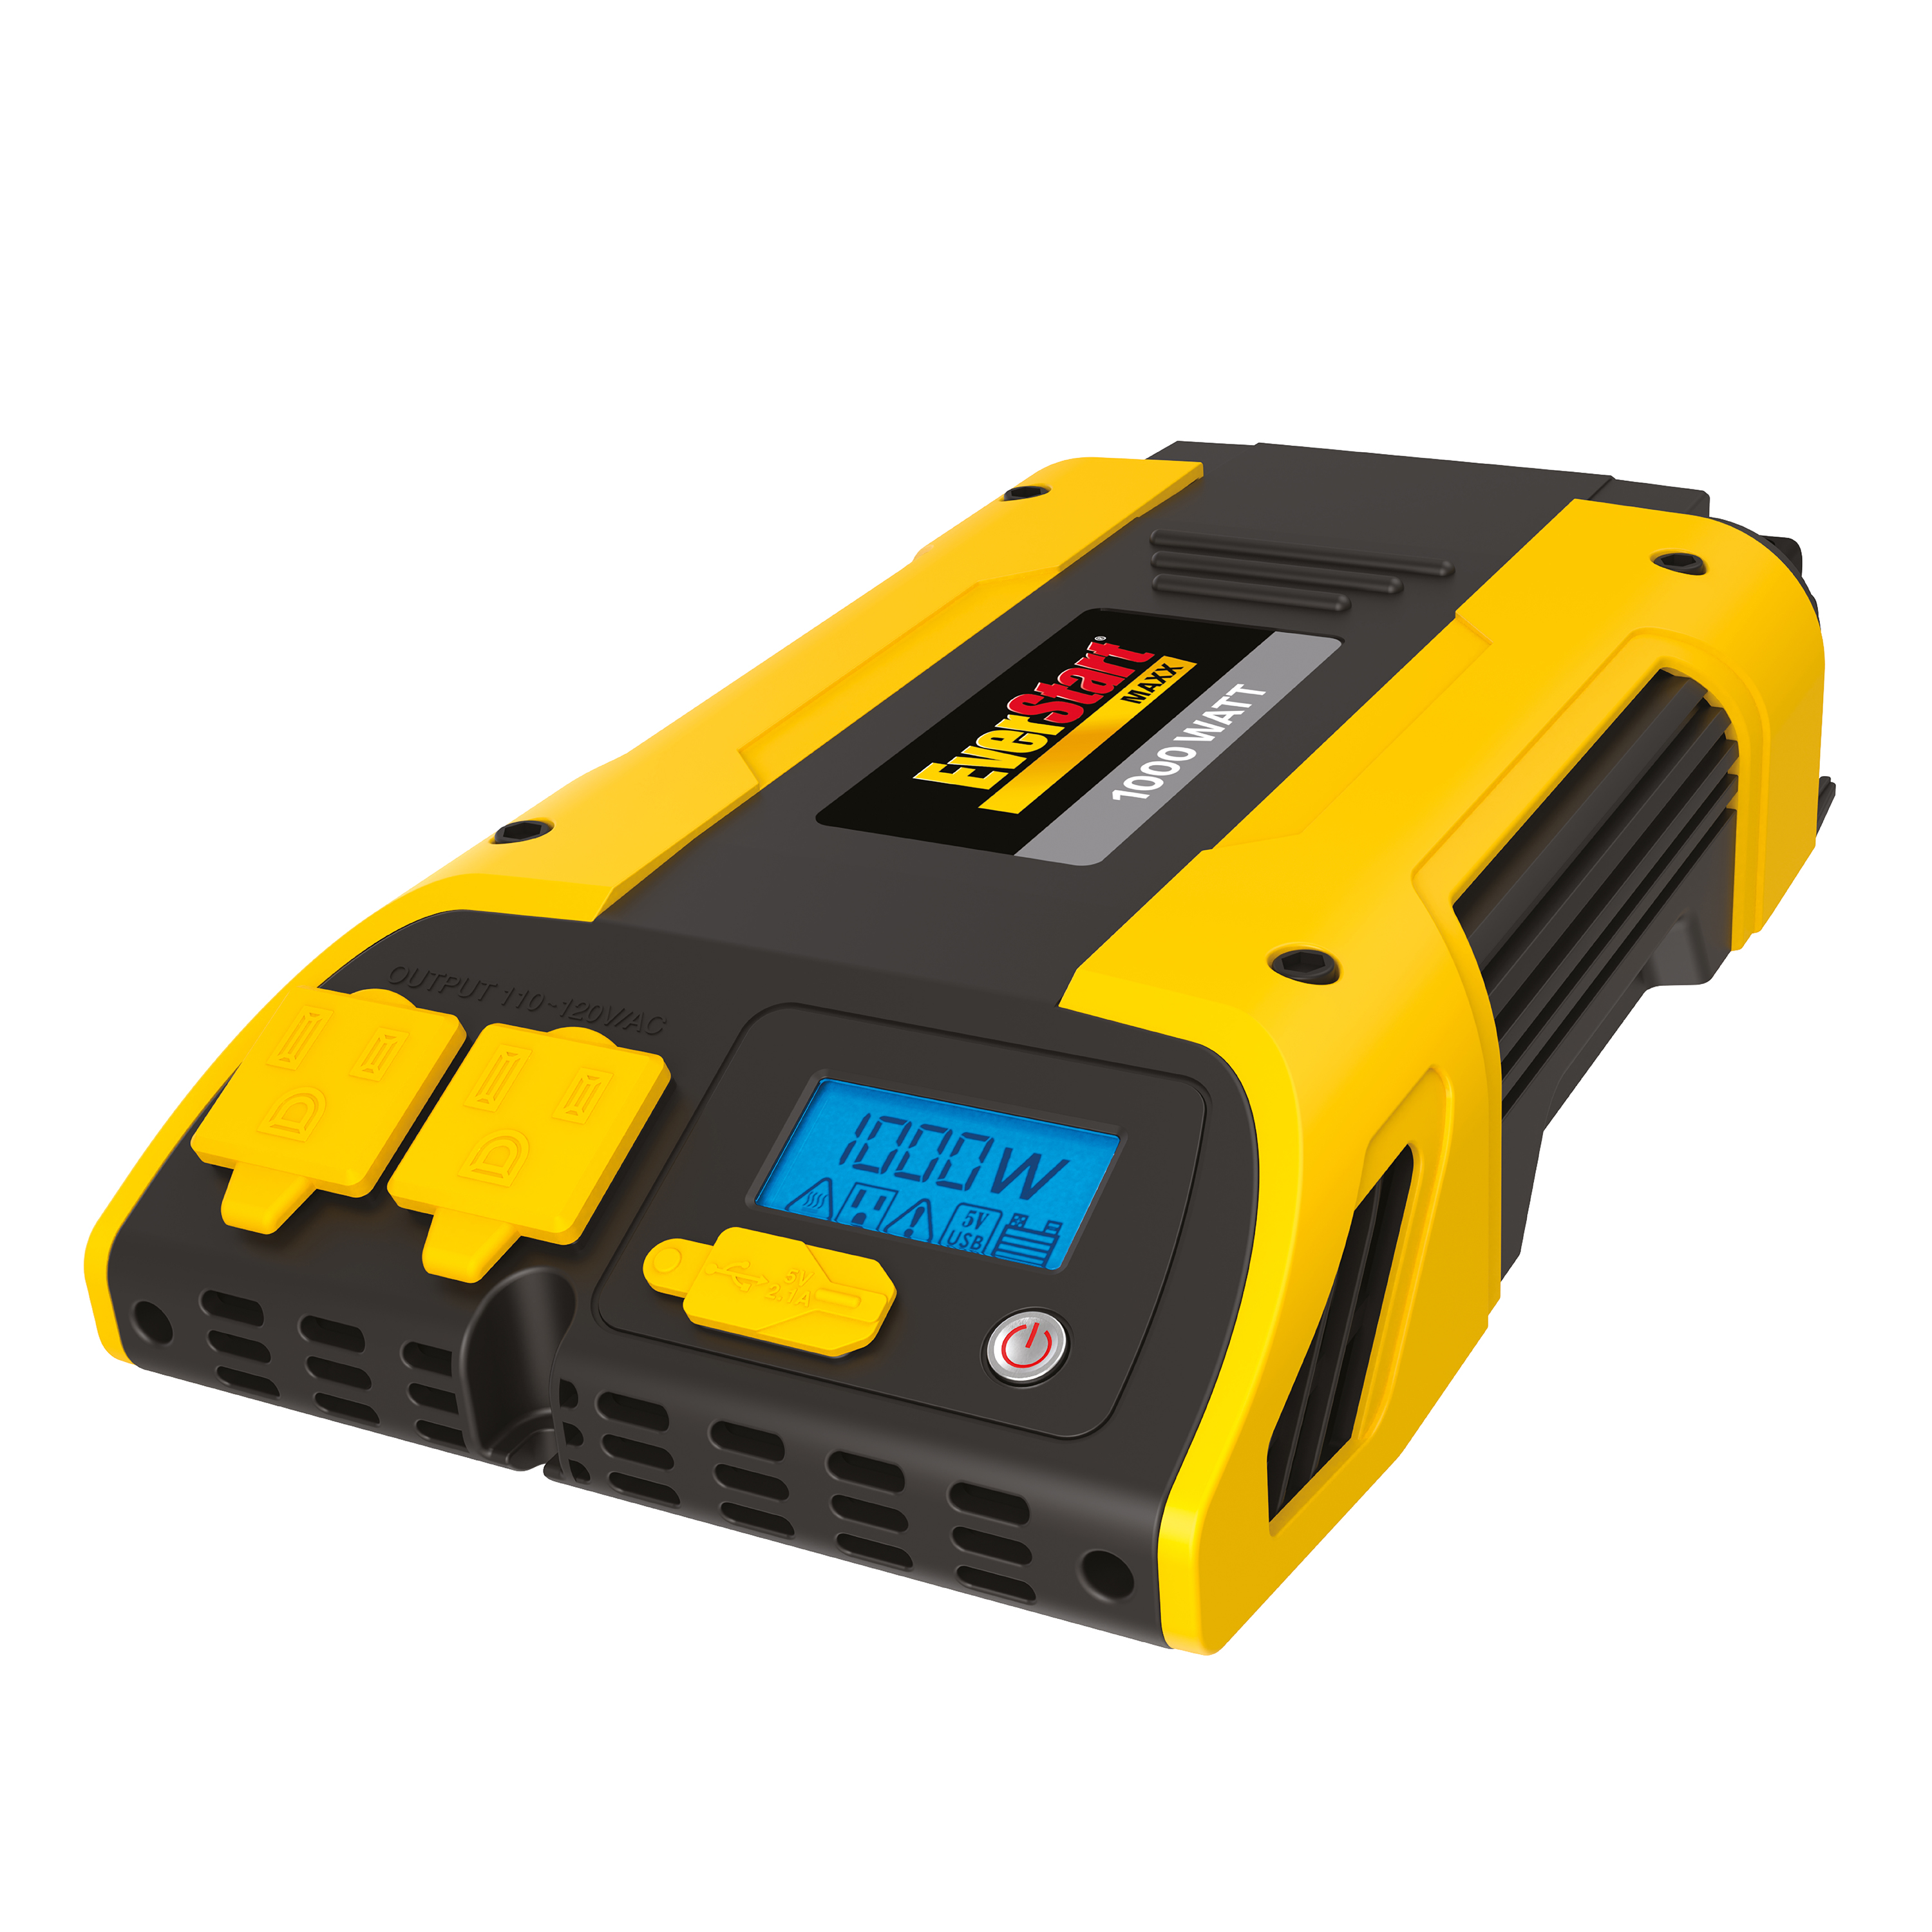 EverStart 1000 Watt Power Inverter with USB (PC1000E) in Yellow and Black - New - image 1 of 8